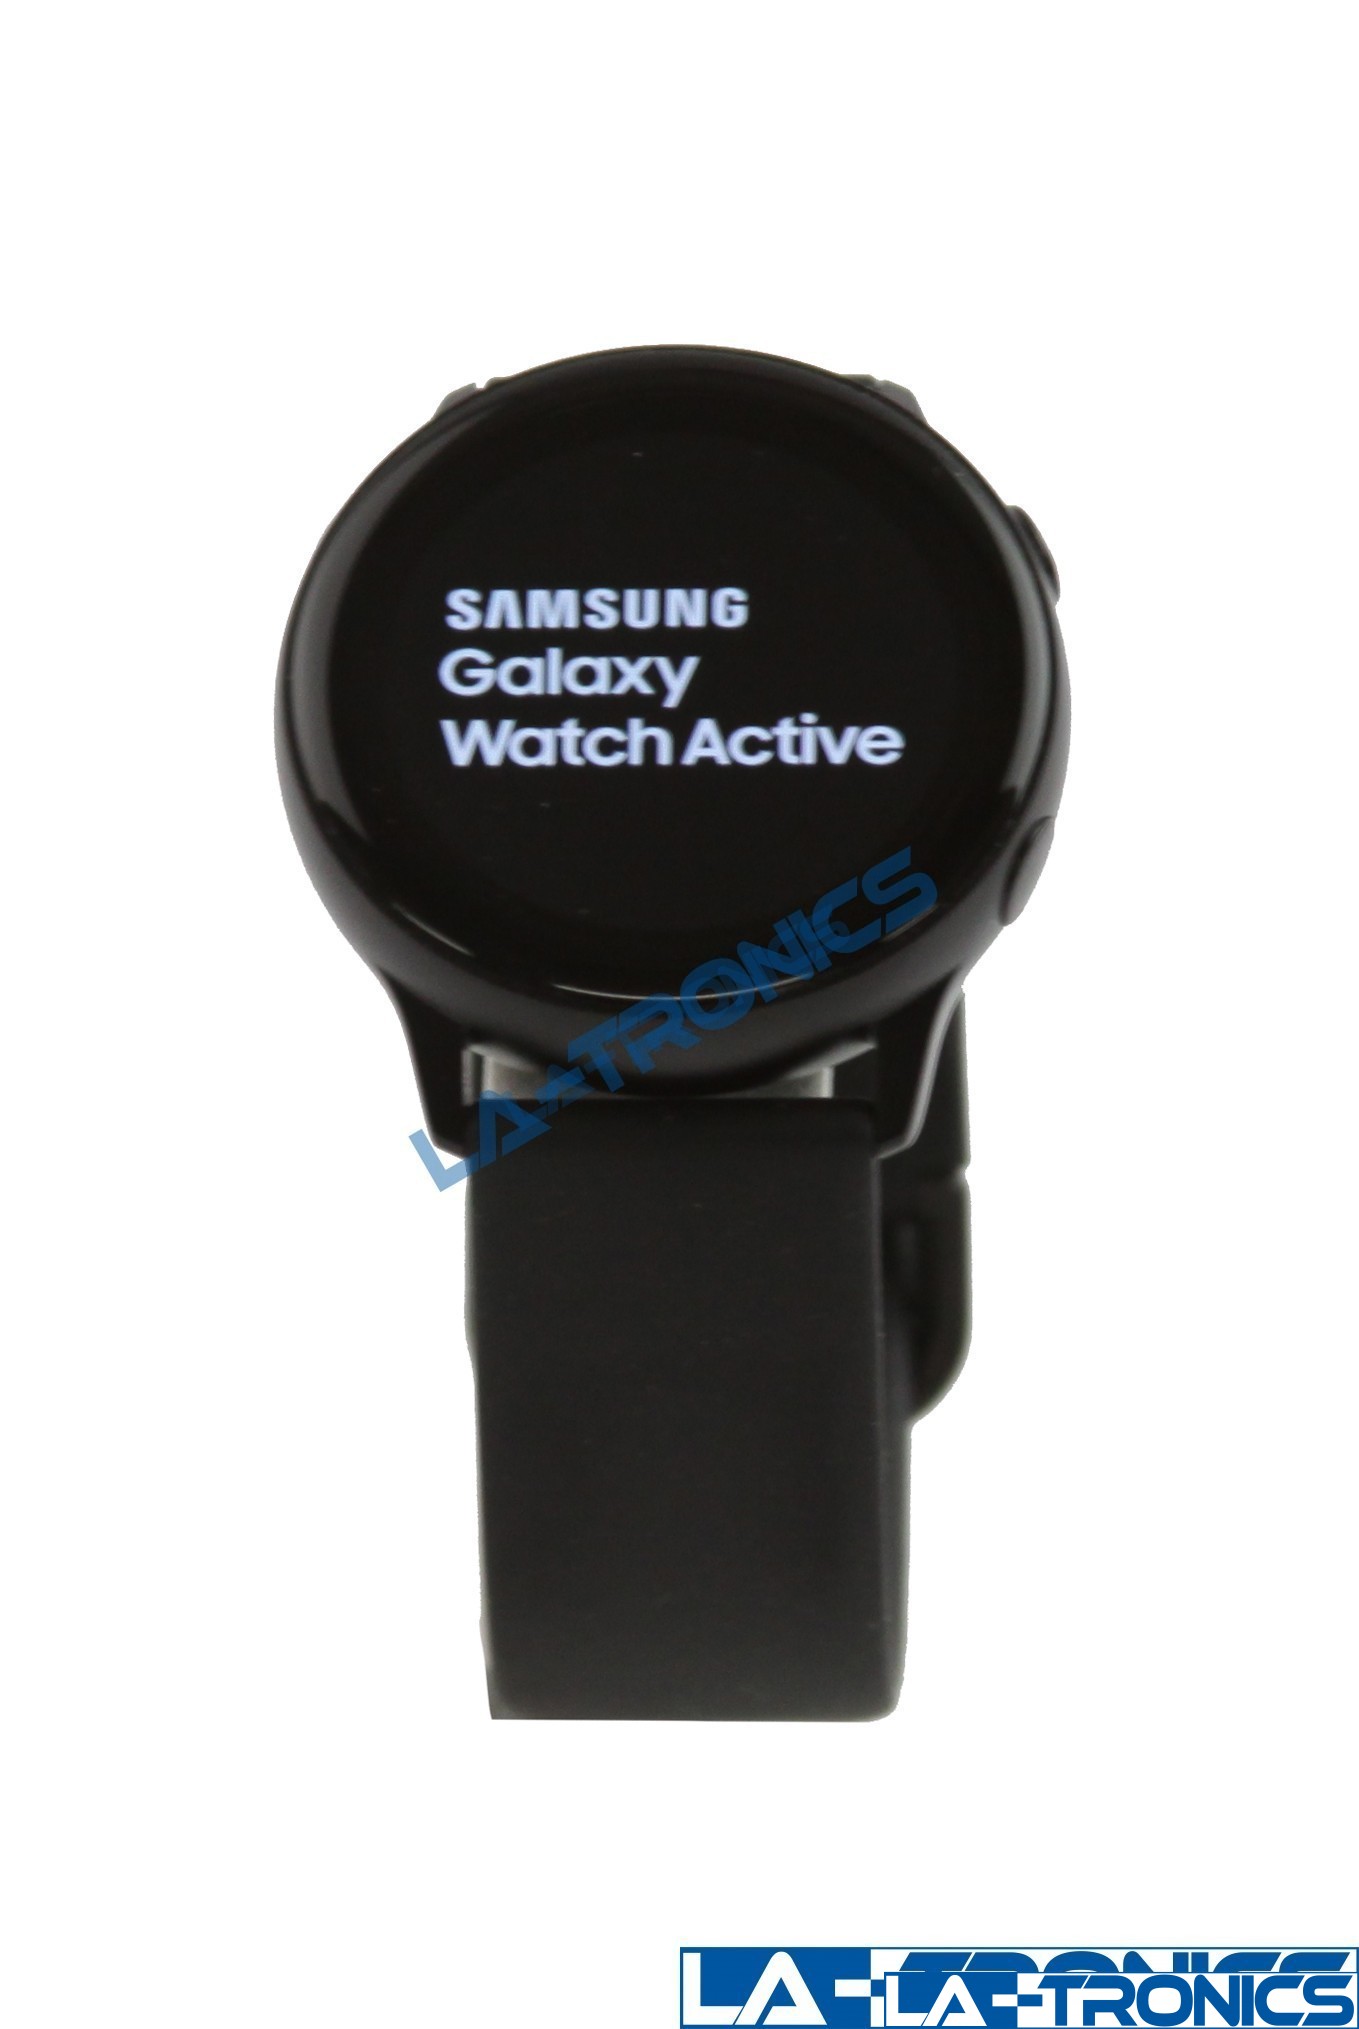 Samsung SM-R500 Galaxy Watch Active Smartwatch Black SM-R500NZKAXAR